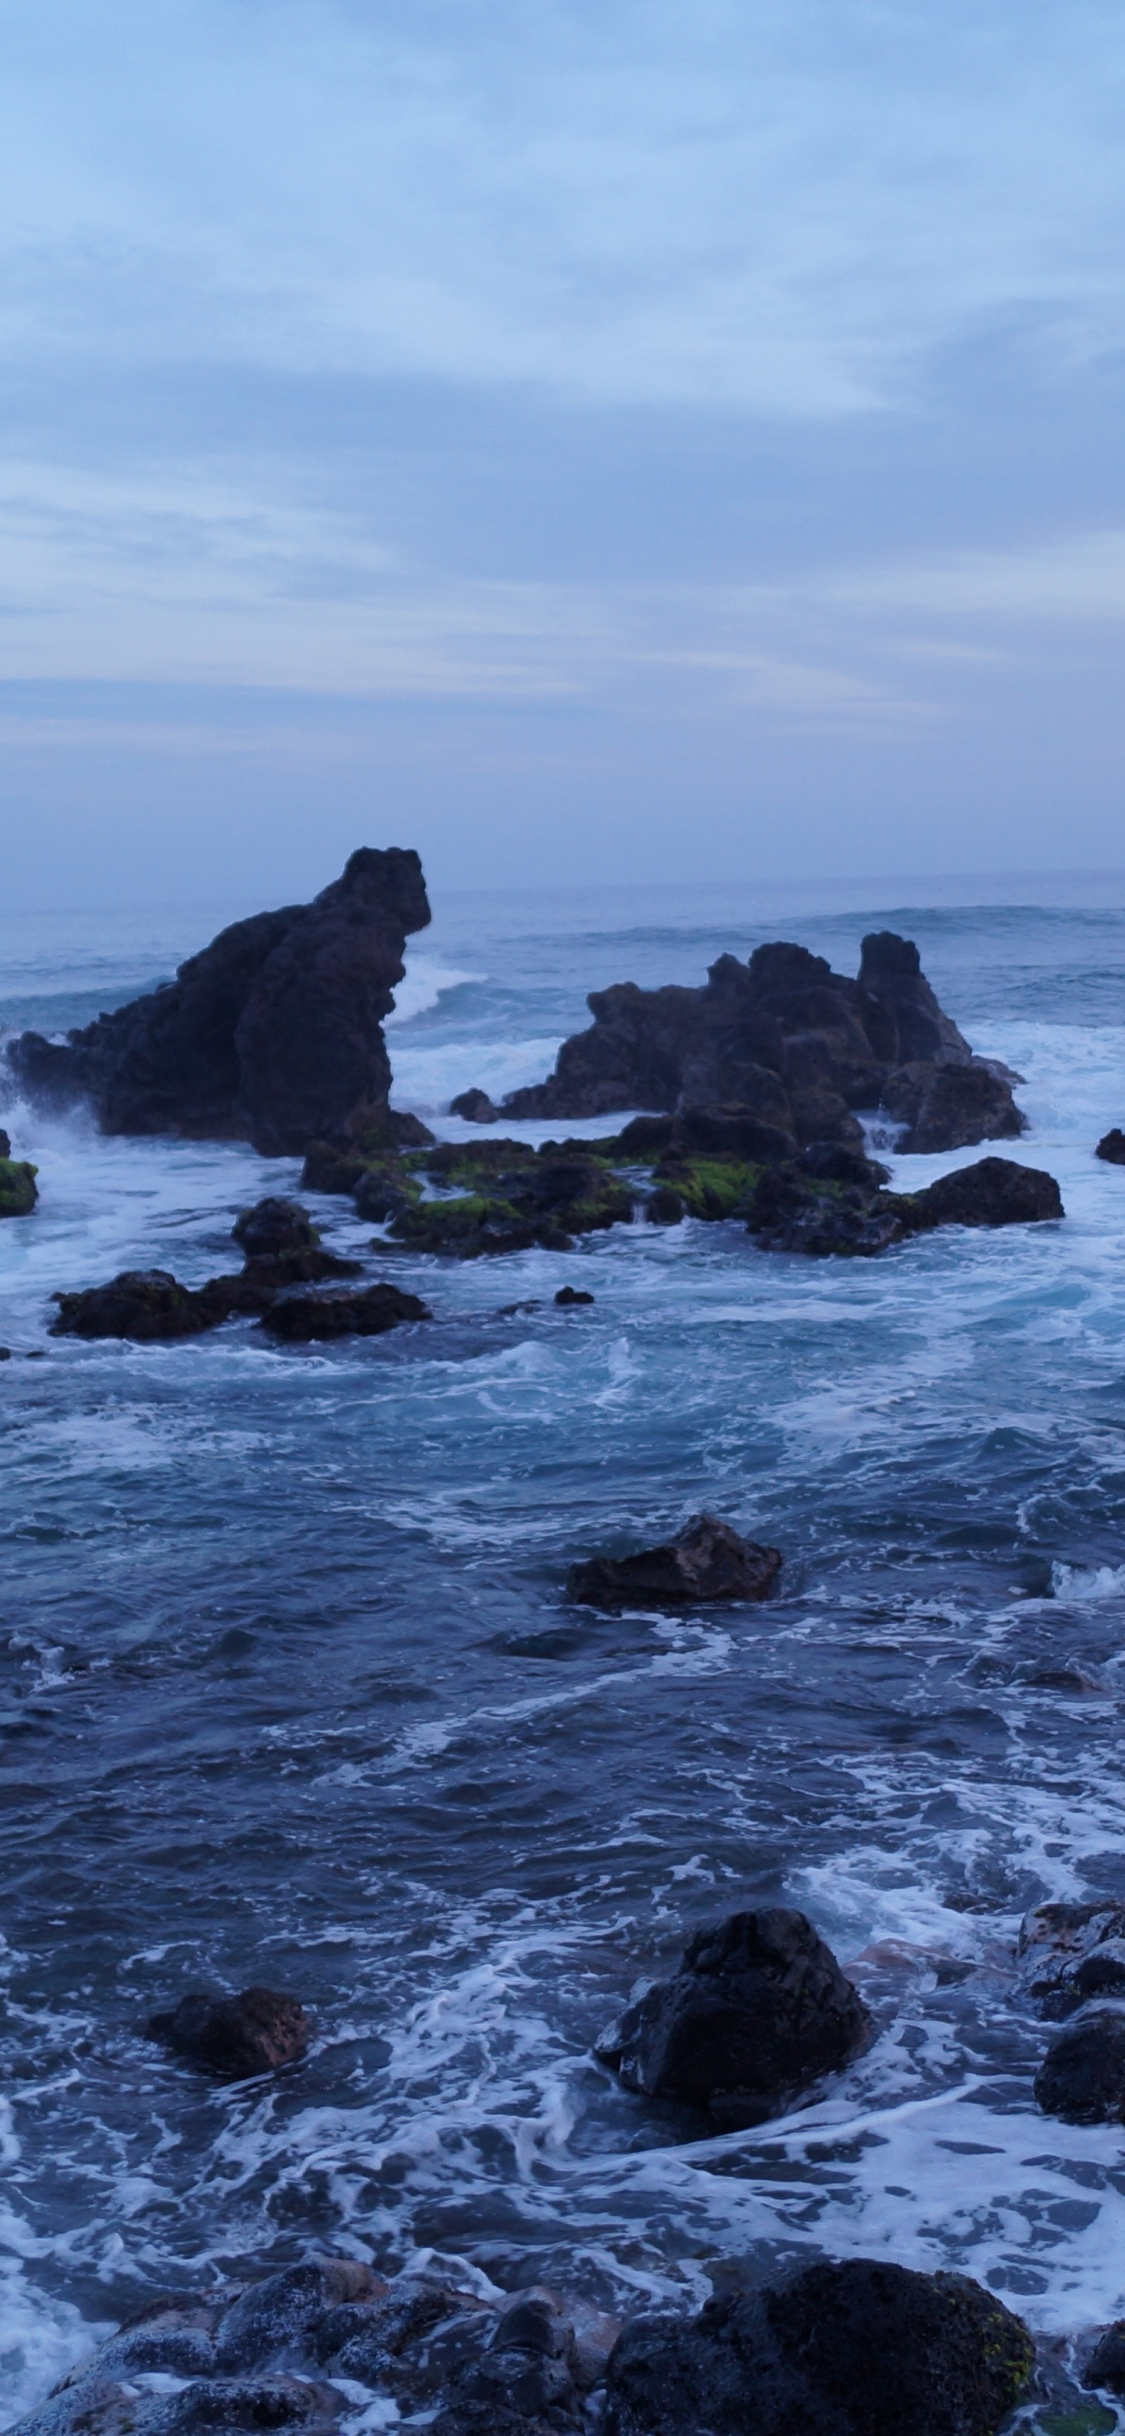 Download wallpaper 1125x2436 rocks, sea shore, coast, hawaii, iphone x,  1125x2436 hd background, 4770